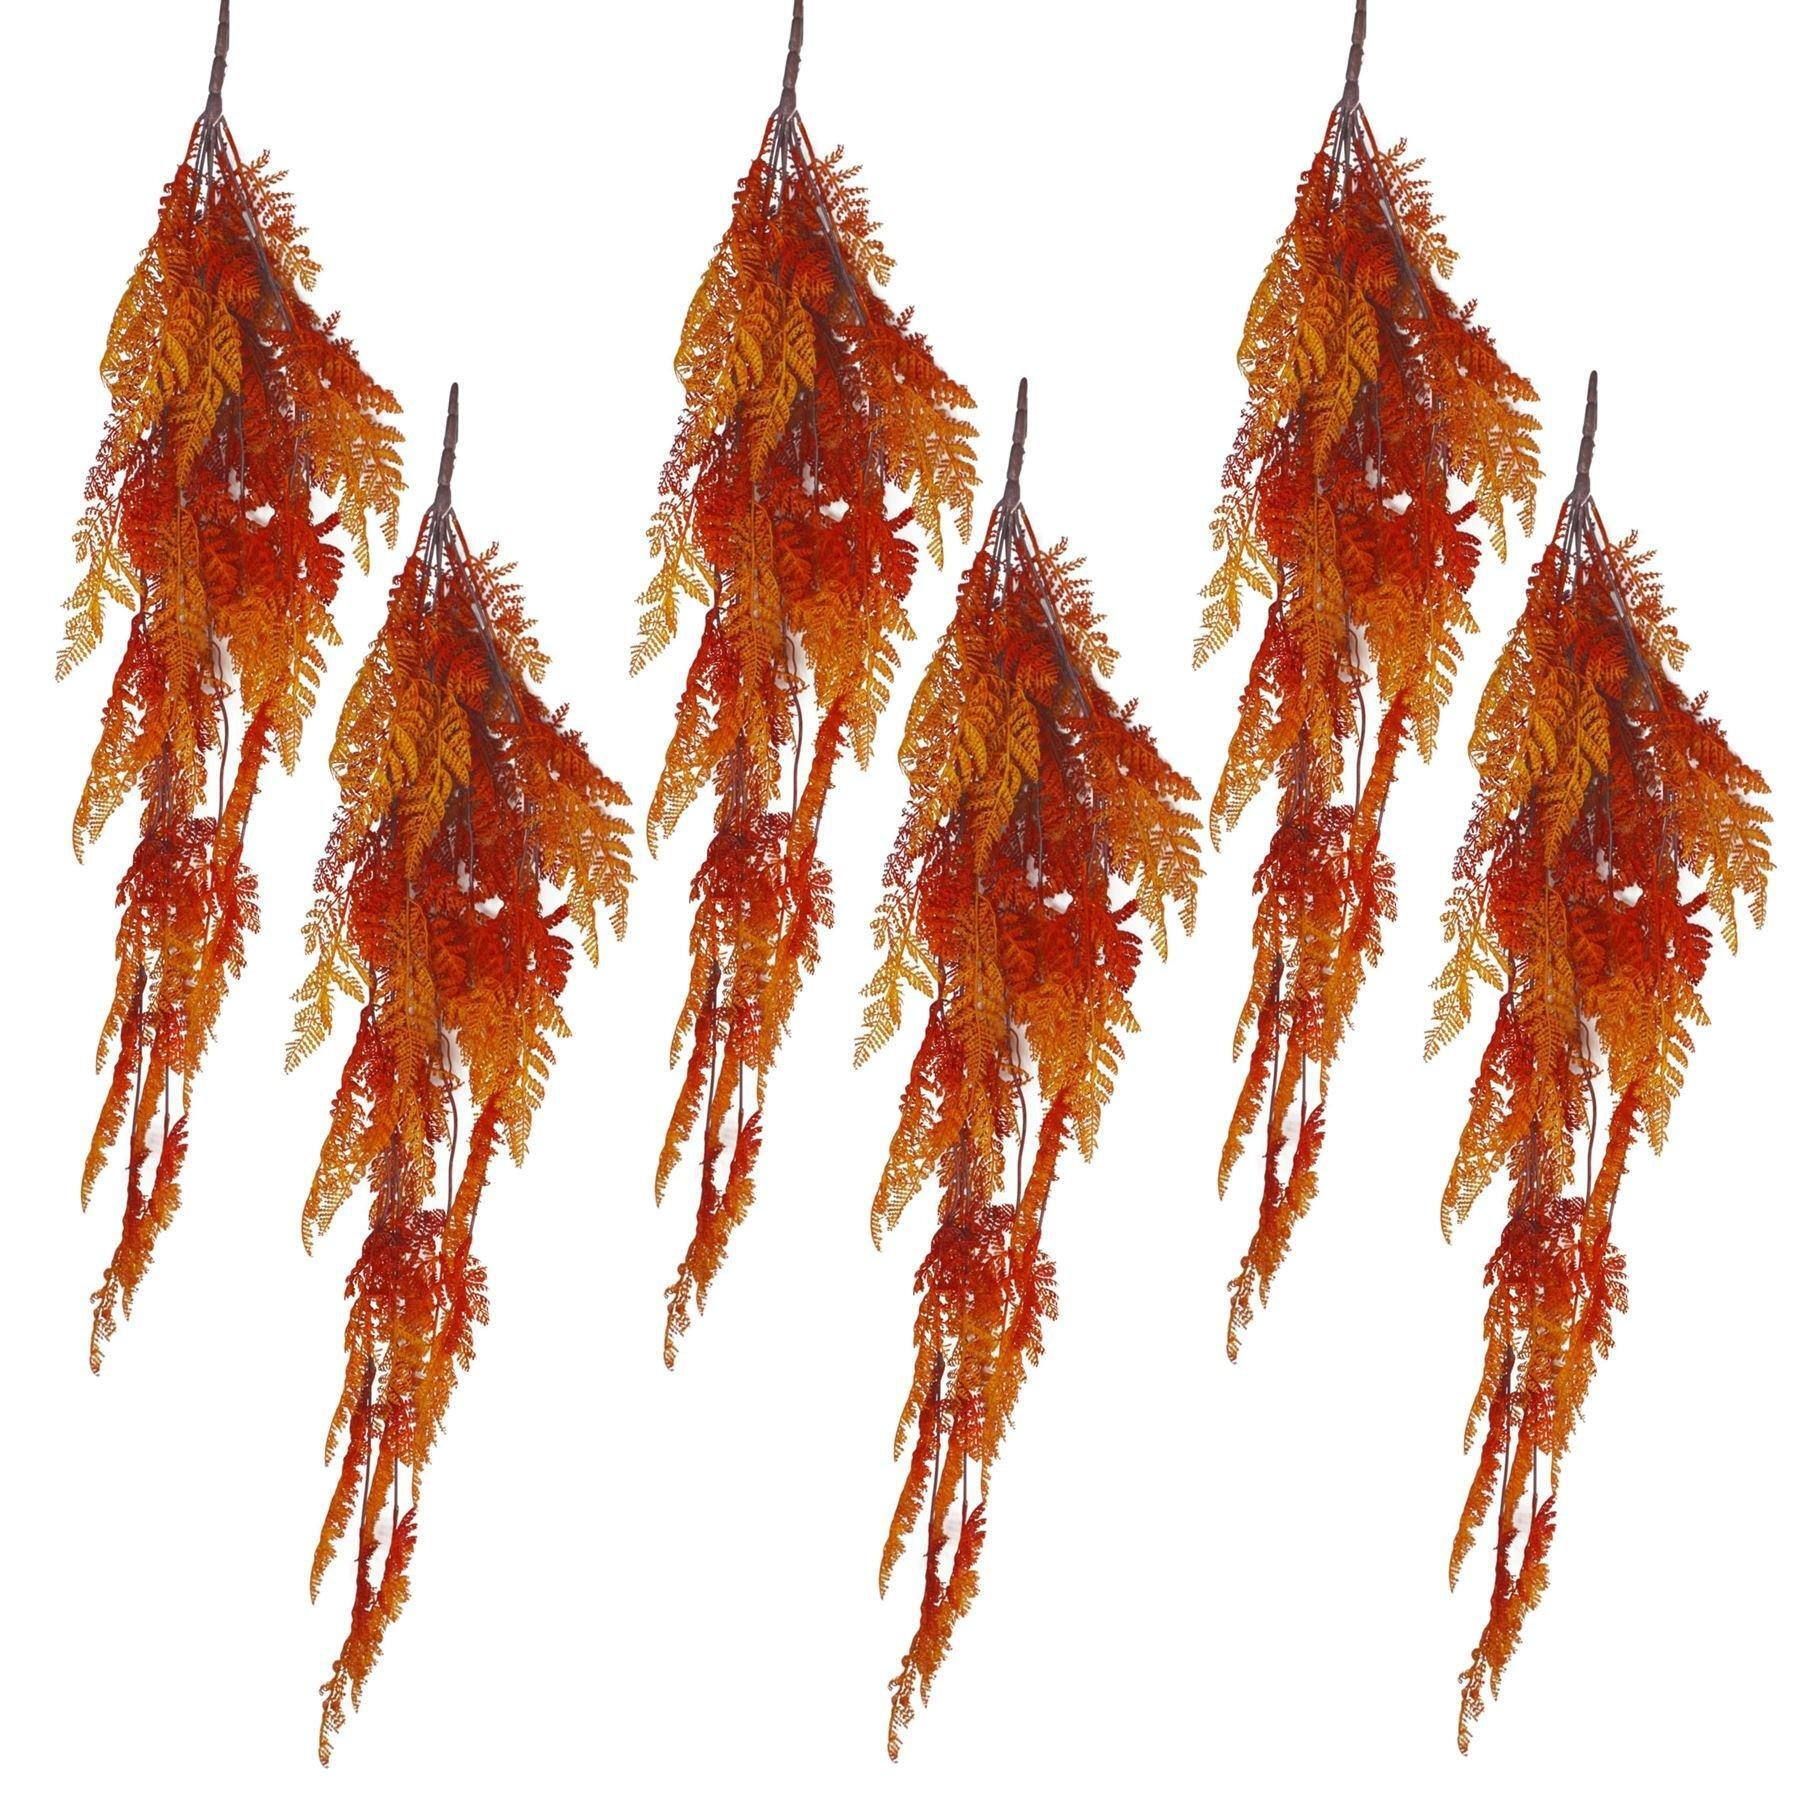 6 x 100cm Artificial Hanging Maidenhair Fern Plant Autumn Orange - image 1